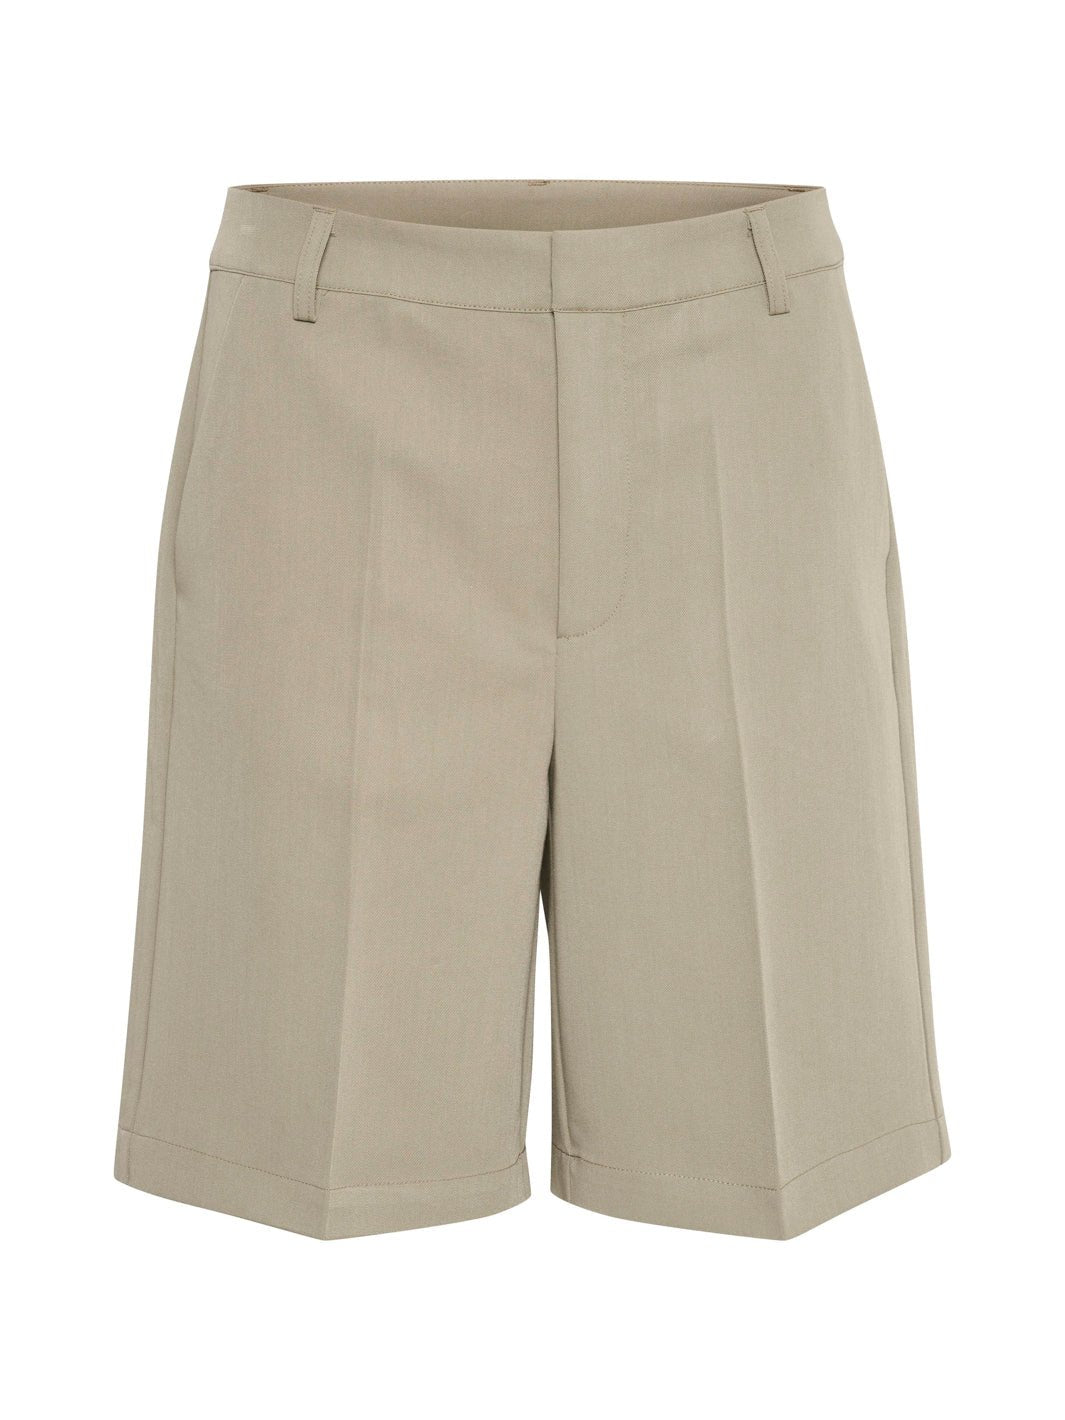 Kaffe KAsakura zipper shorts vetiver - Online-Mode